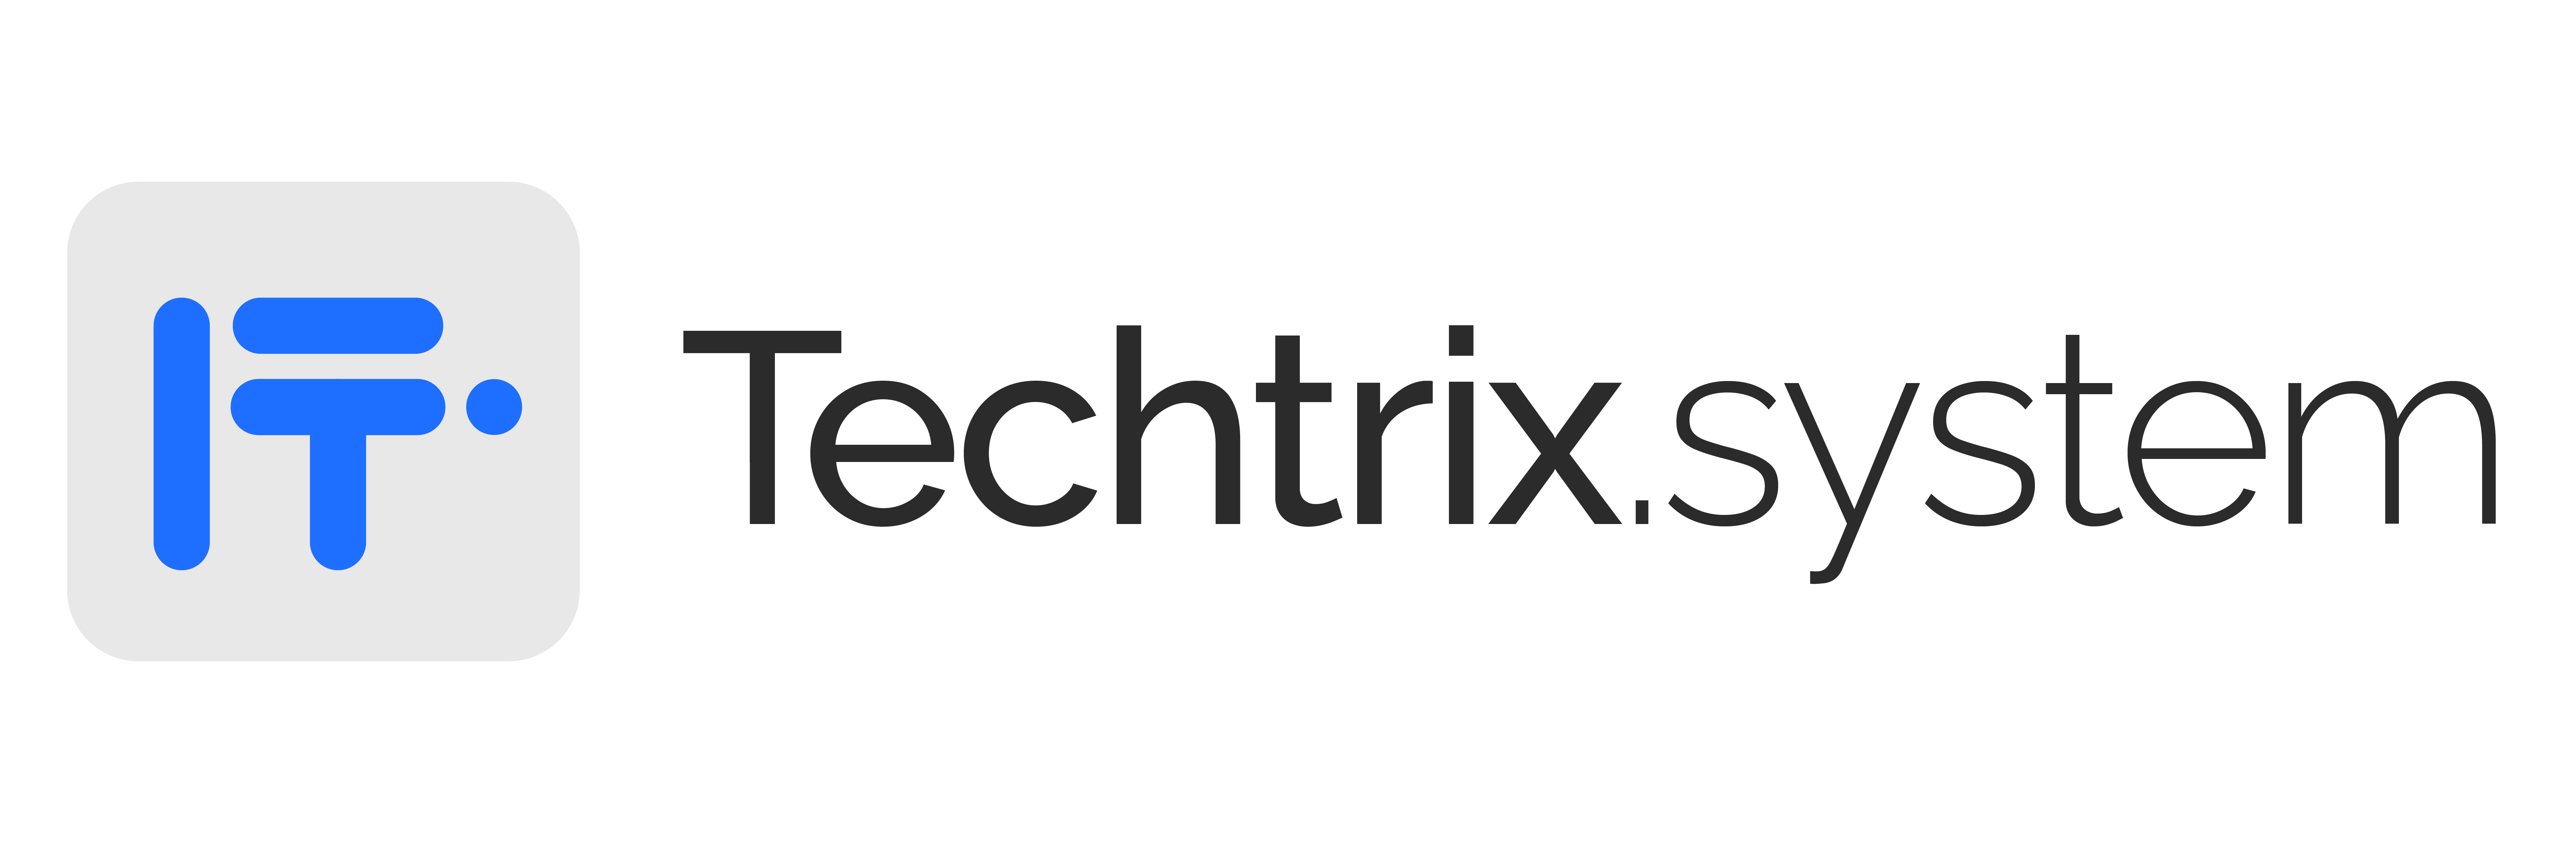 Techtrix System logo